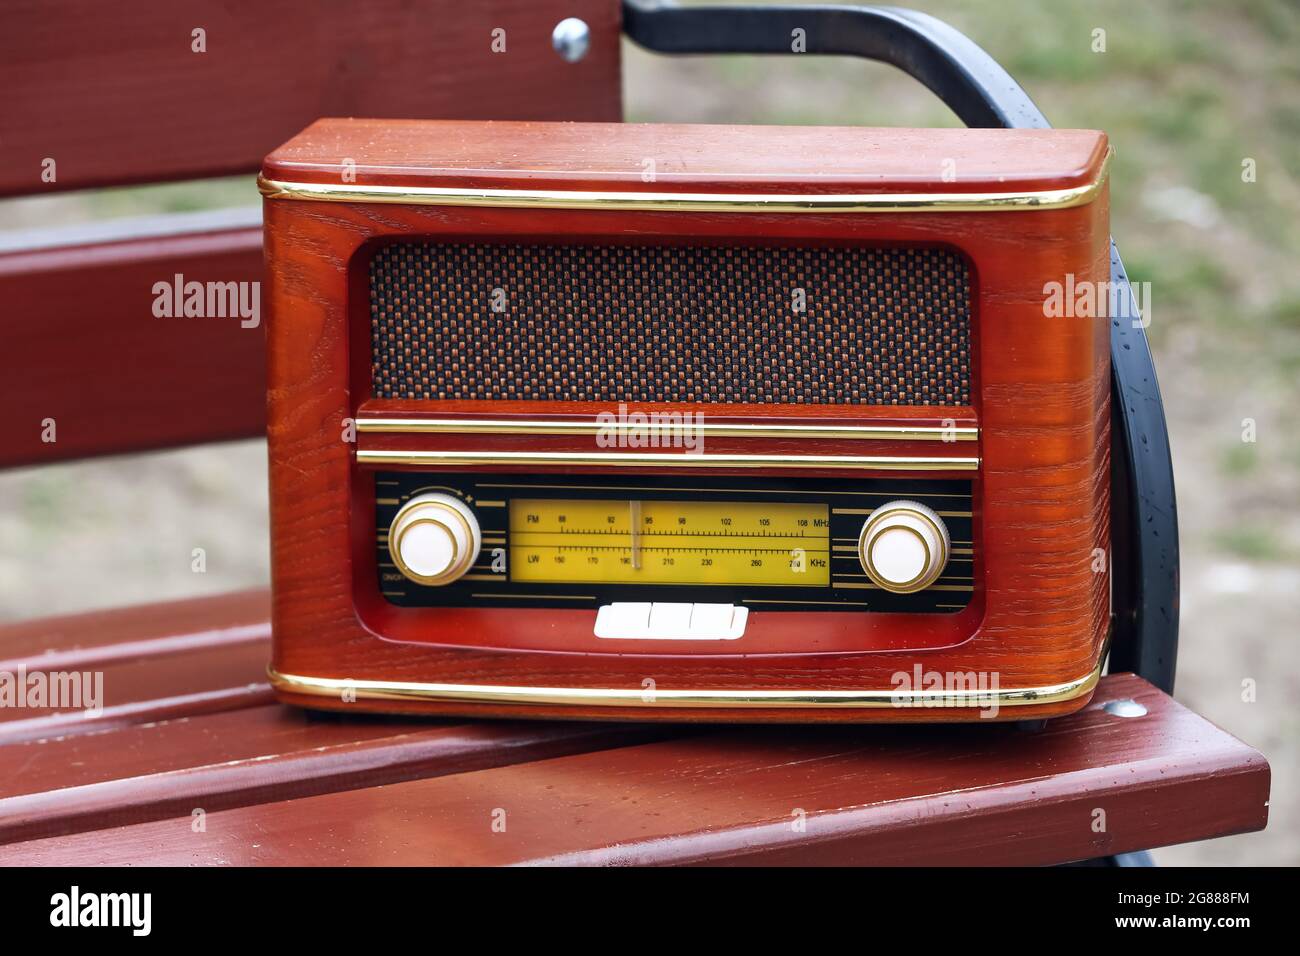 Retro radio receiver on bench outdoors, closeup Stock Photo - Alamy